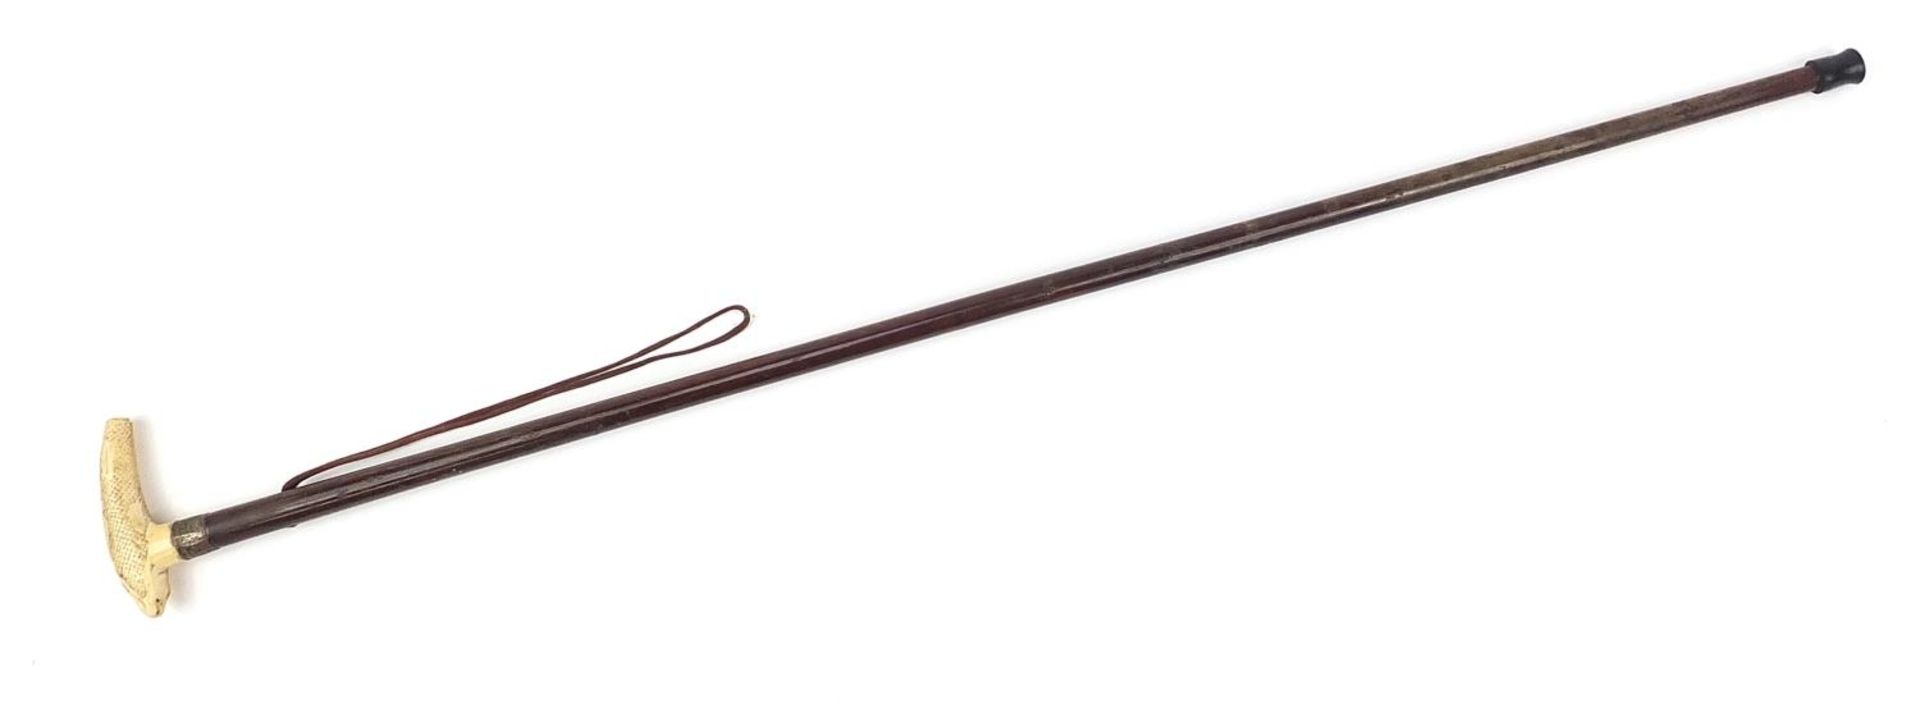 Hardwood walking stick with carved ivory Koi carp handle, 88cm in length - Image 6 of 7